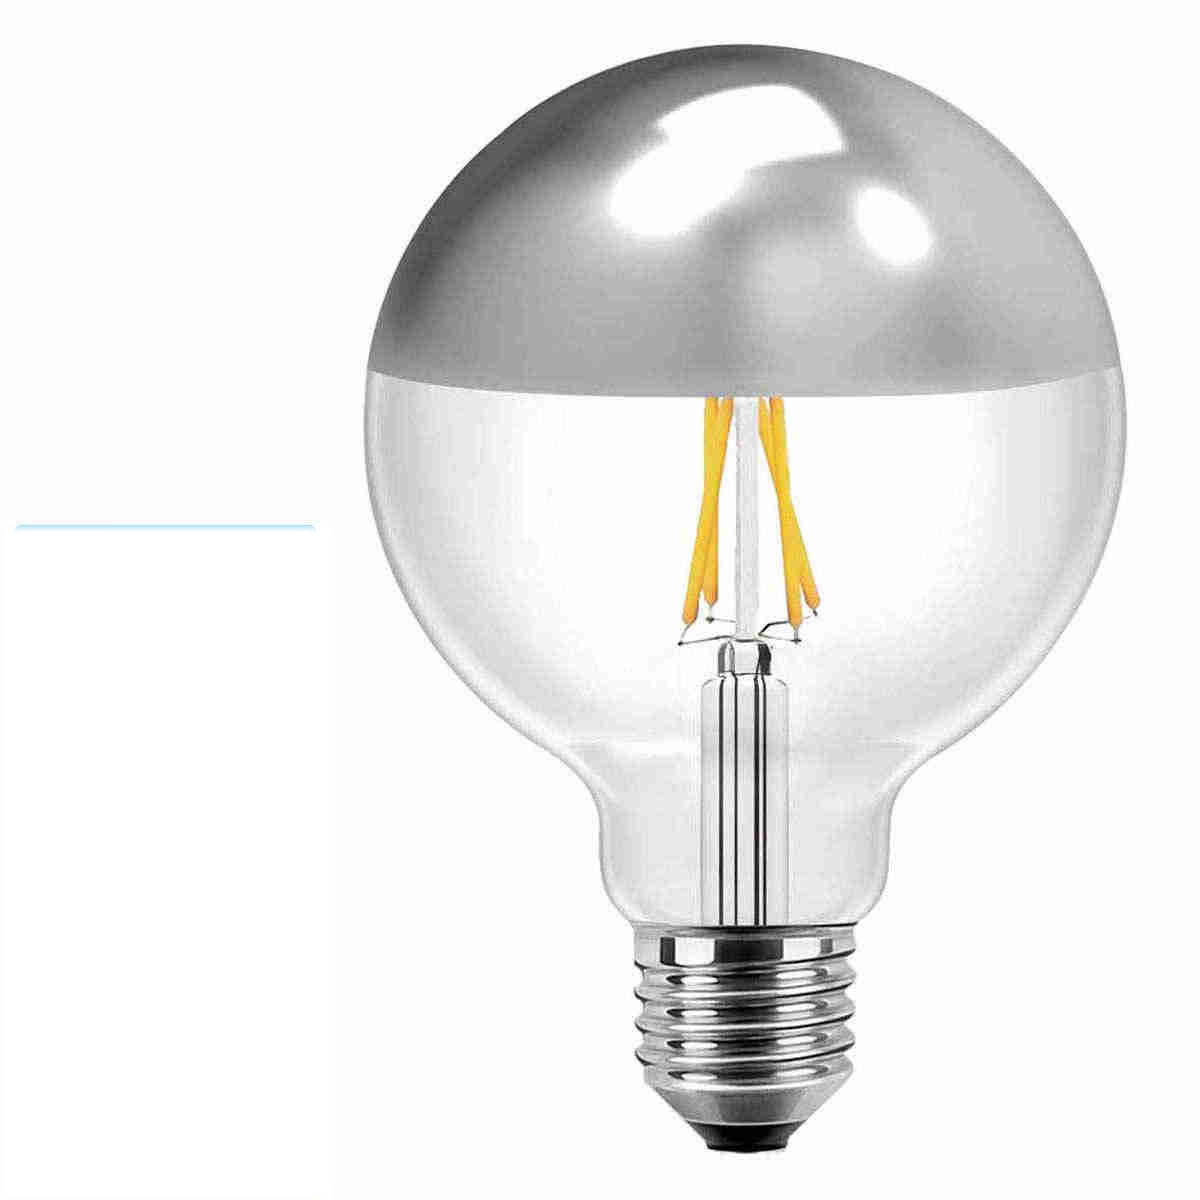 Blulaxa - LED Filament Vintage Globelampe 8 Watt E27 827 Warmweiss extra 2700 Kelvin